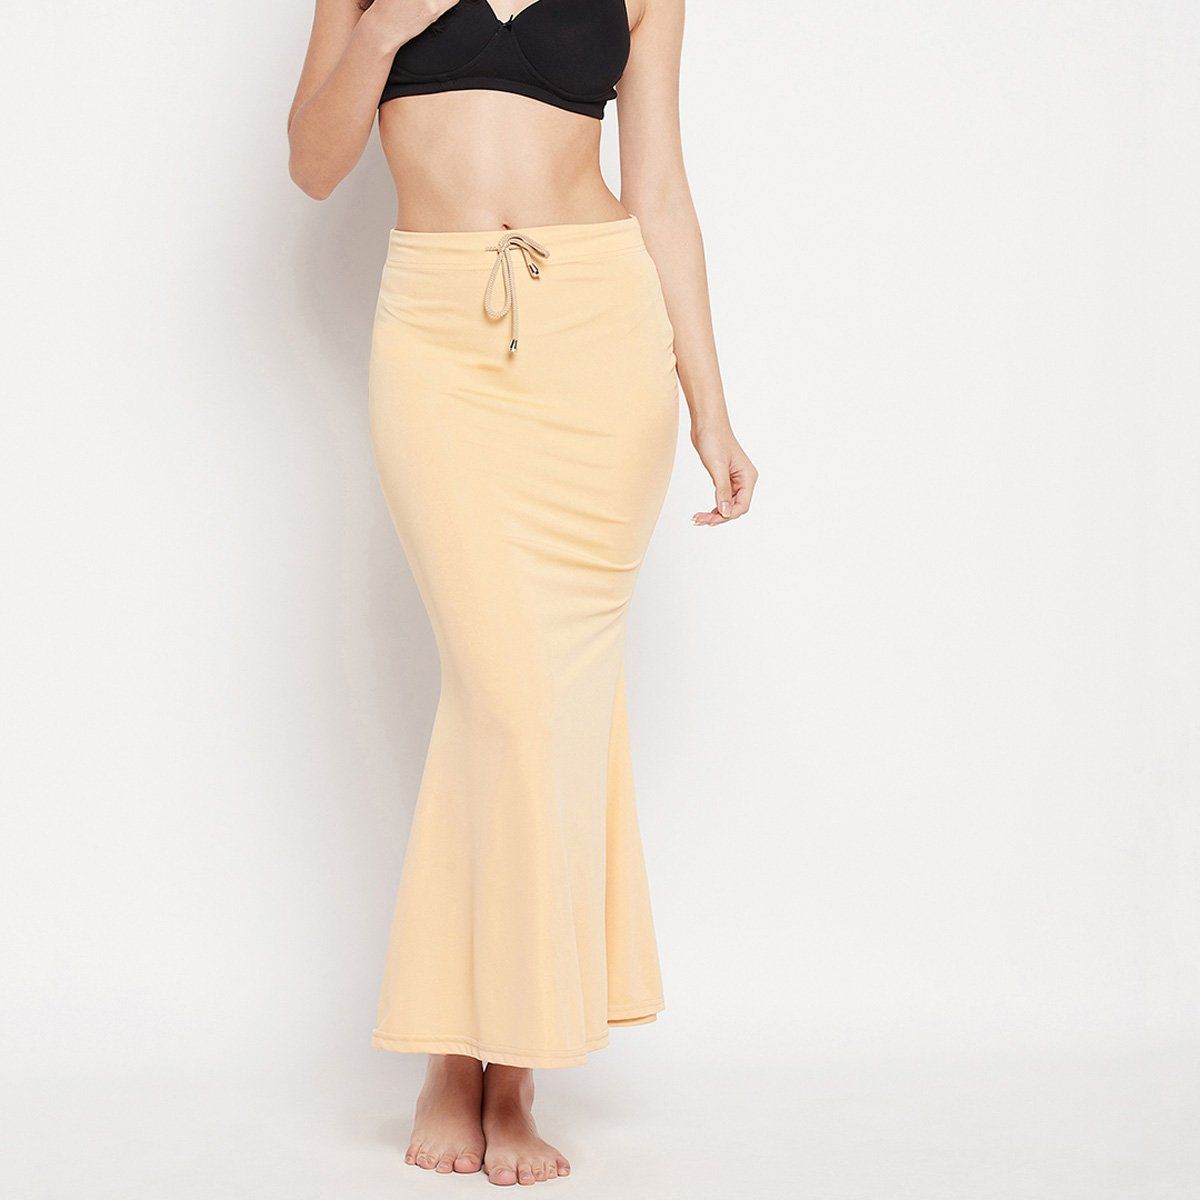 Buy Curves By ZeroKaata Plus Size Mermaid Fit Saree Shapewear